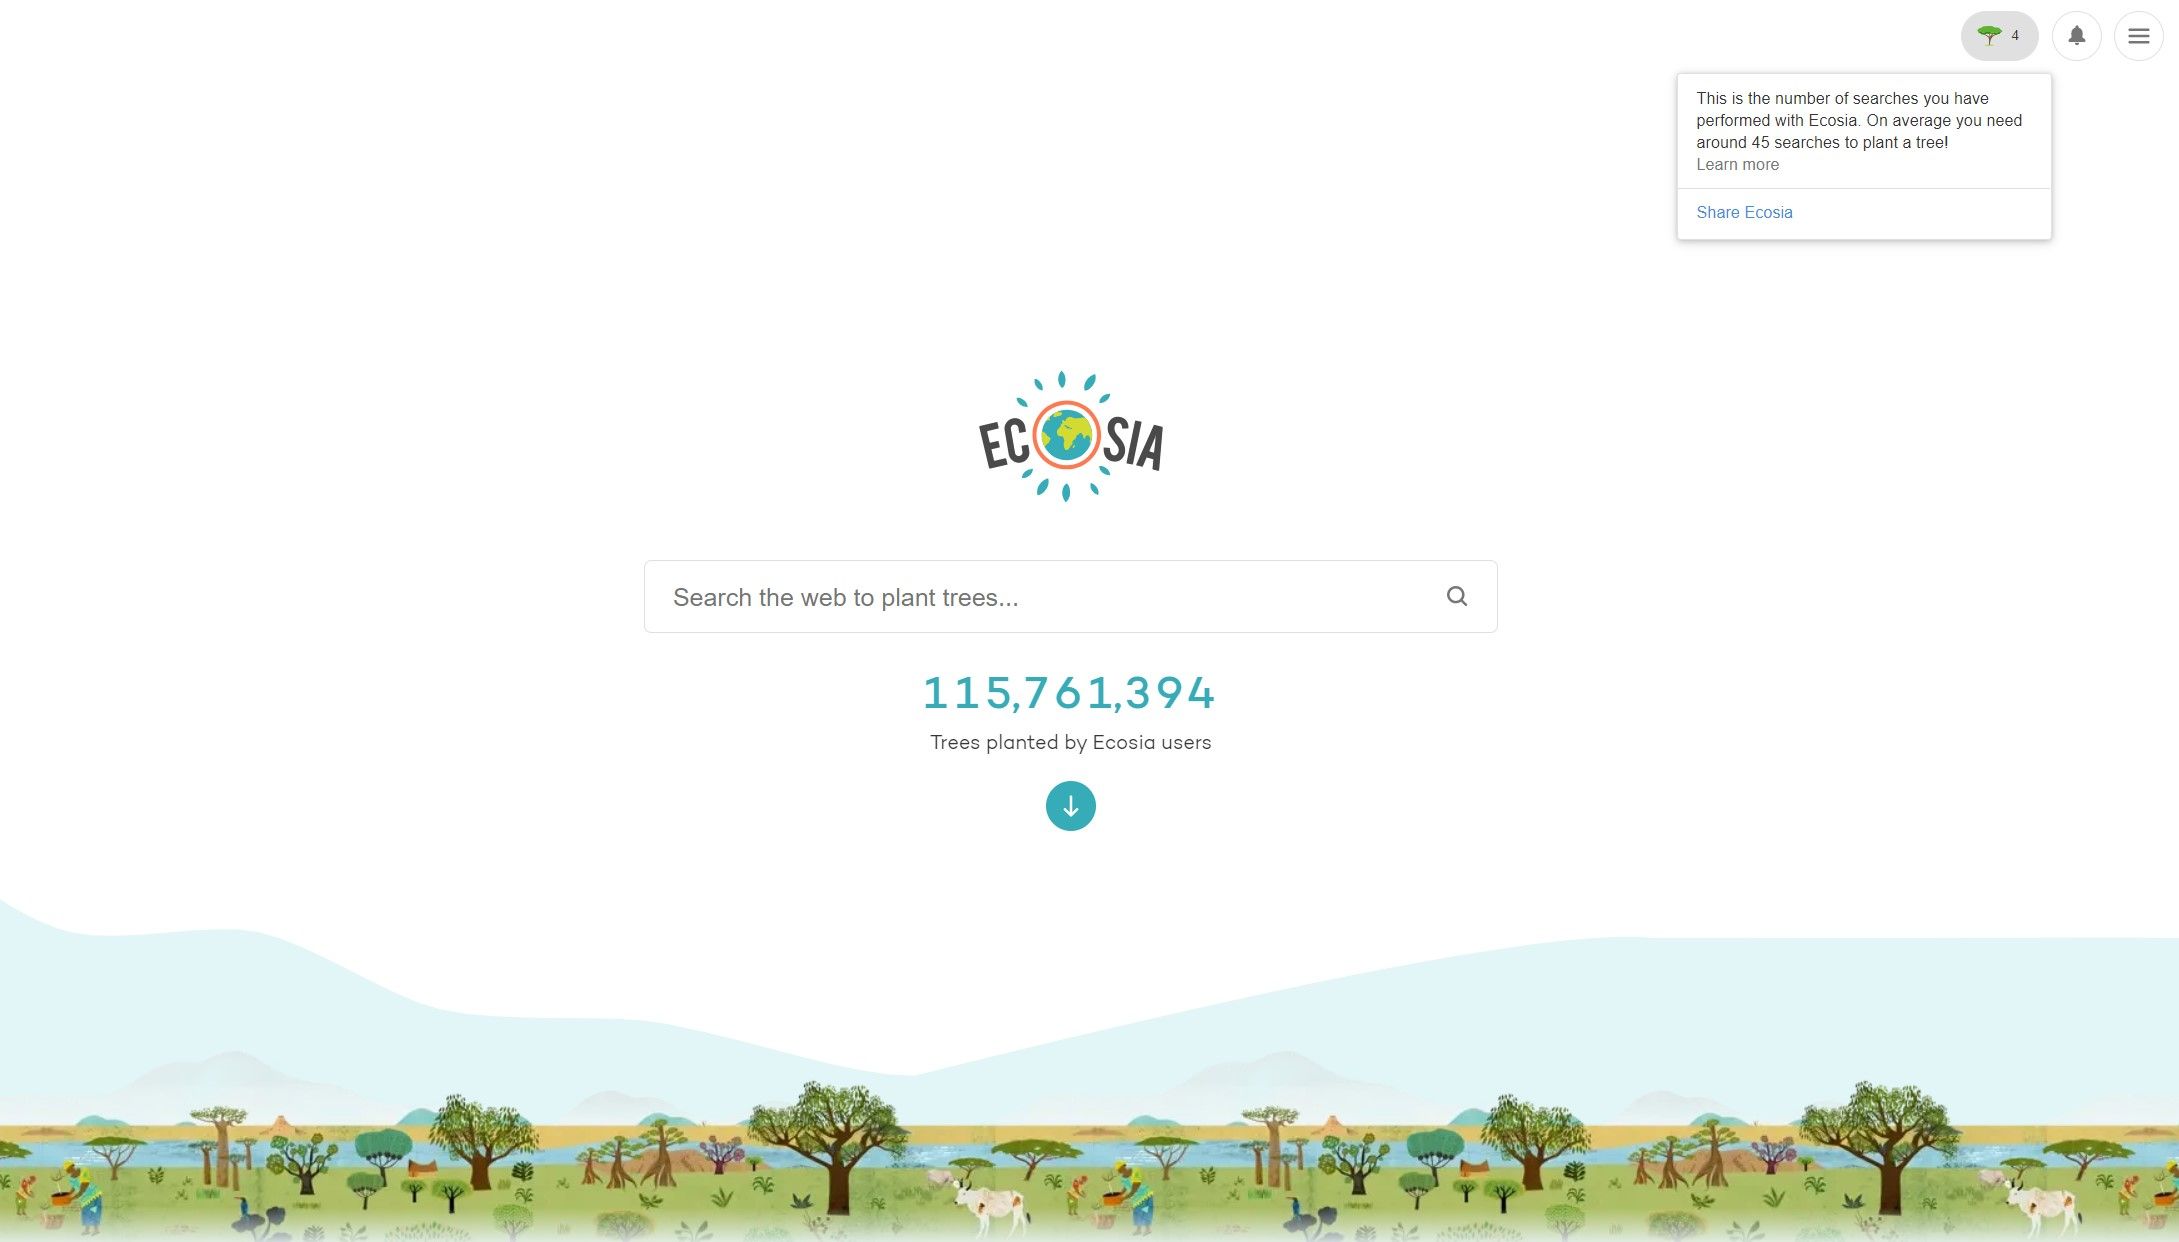 Ecosia homepage search engine